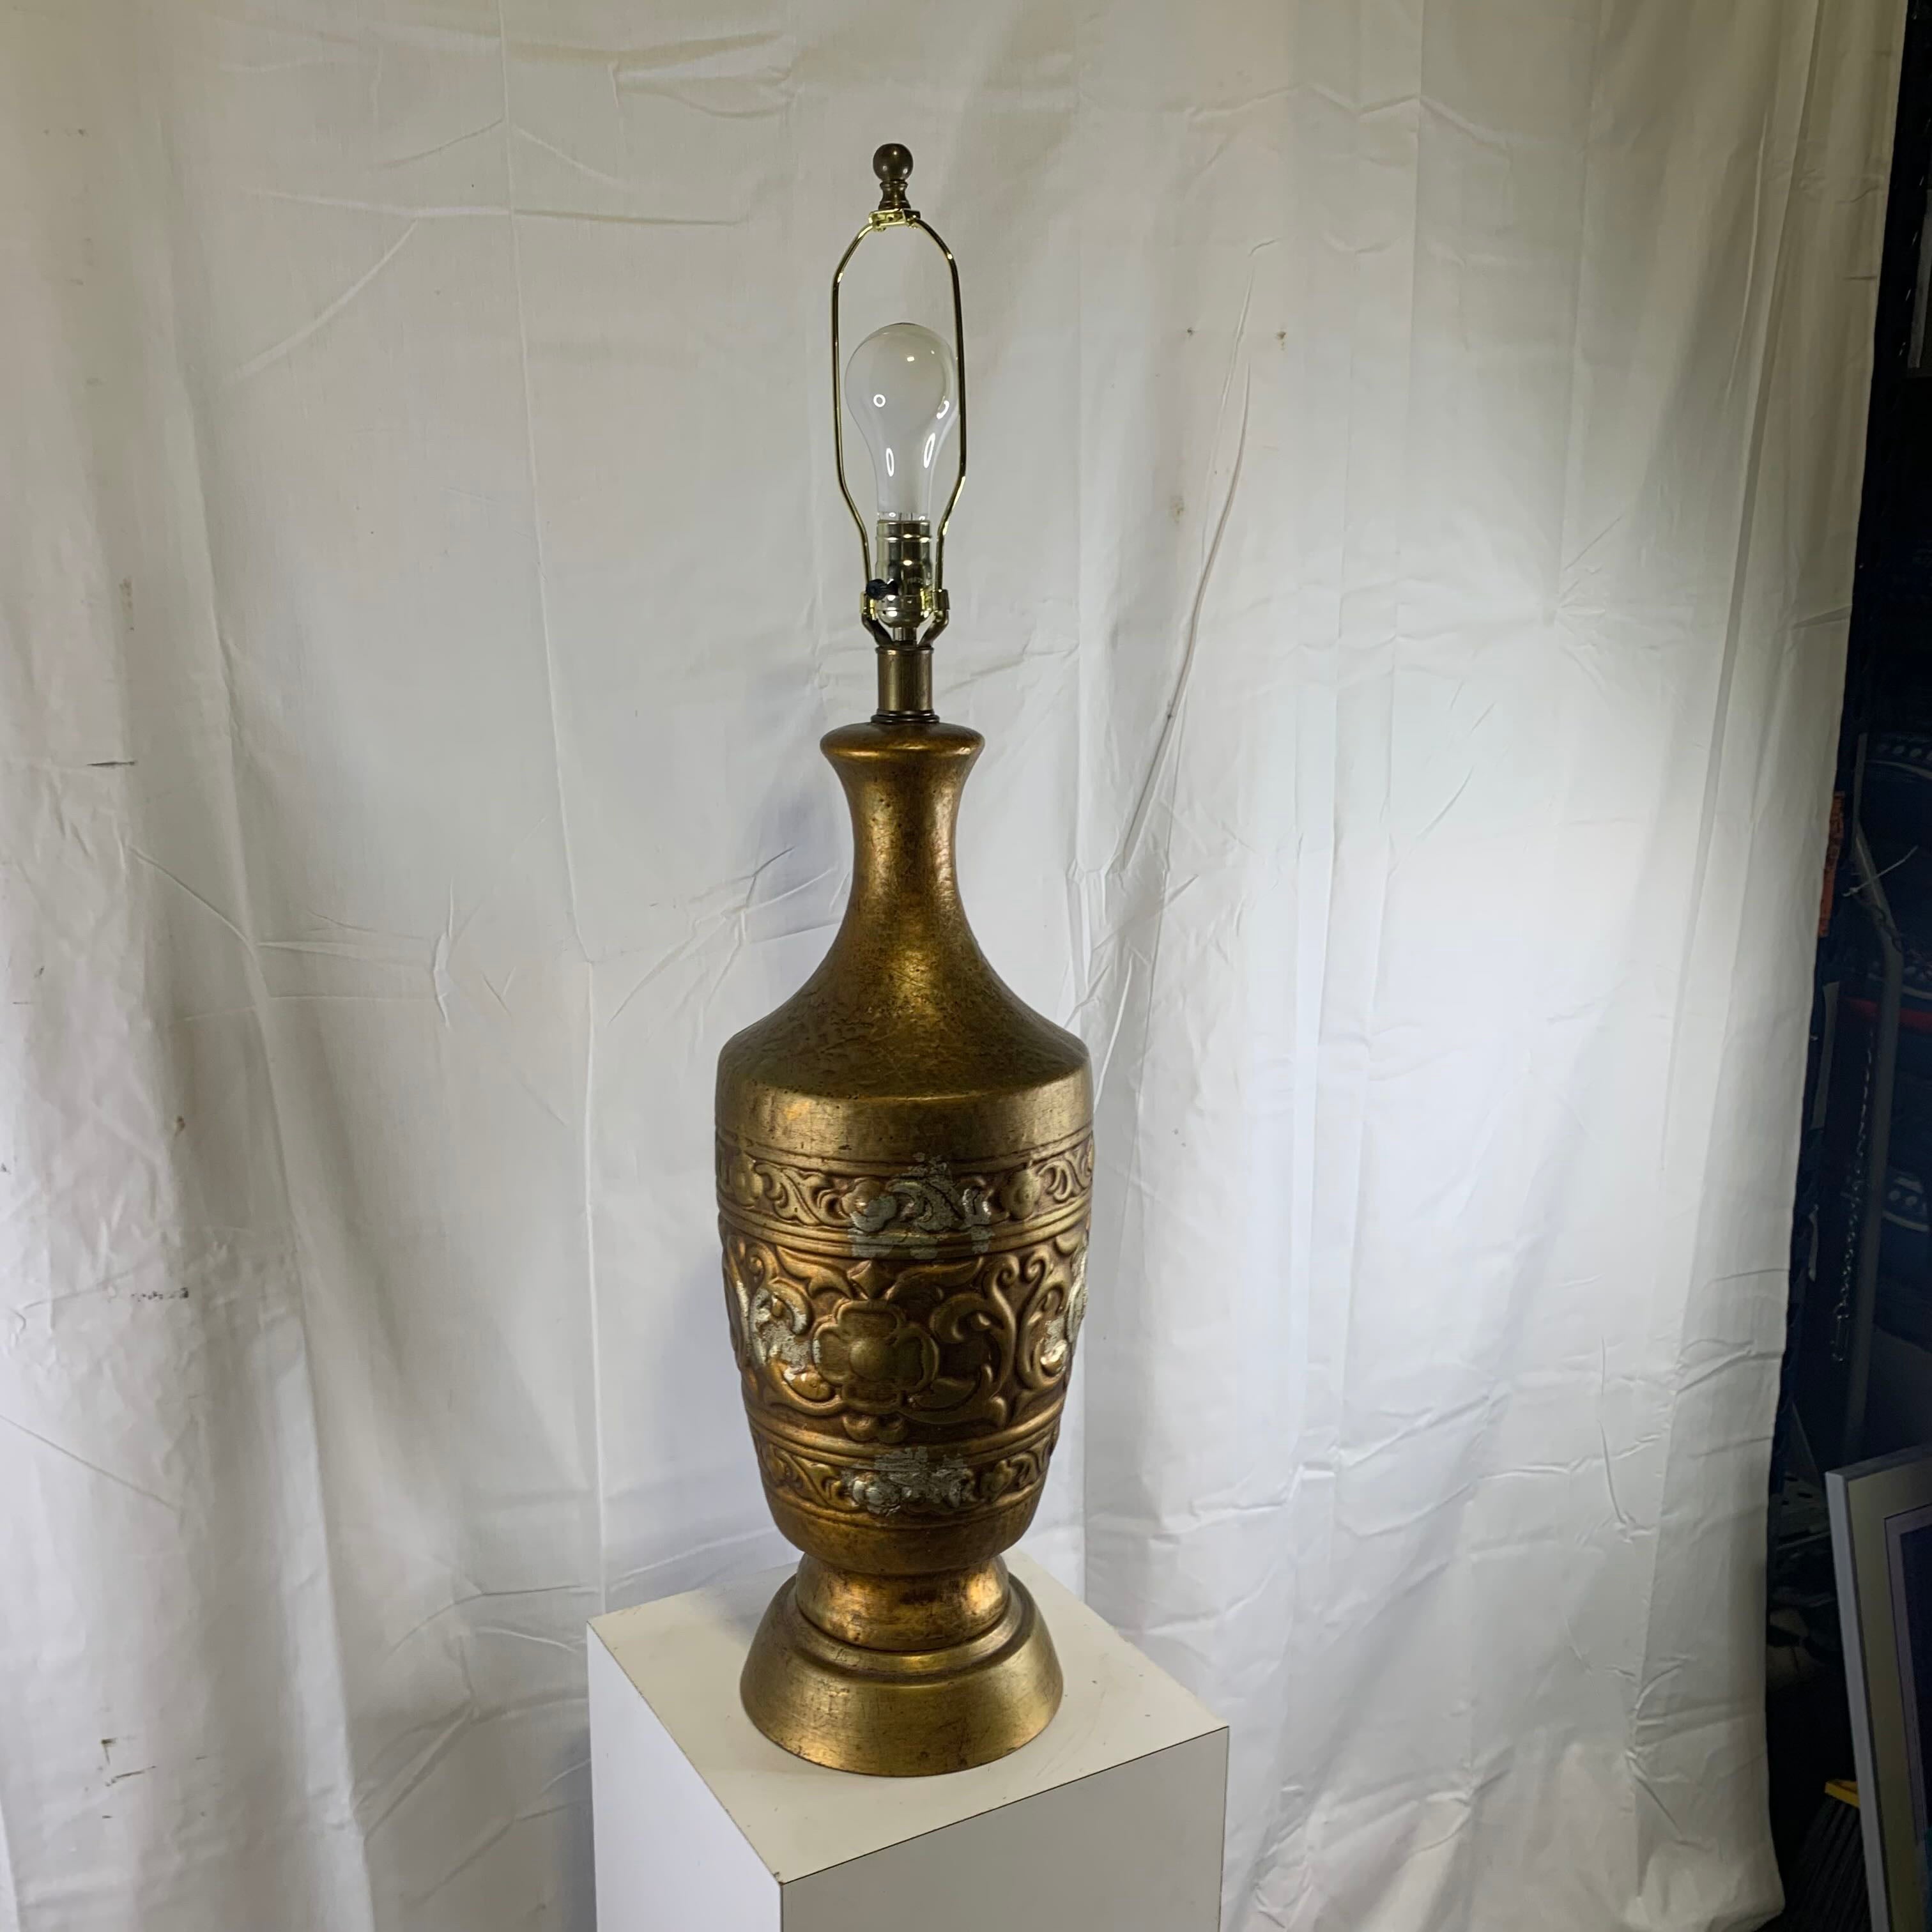 9" Diameter x 37" Gold Painted Ornate Flower Ceramic Table Lamp